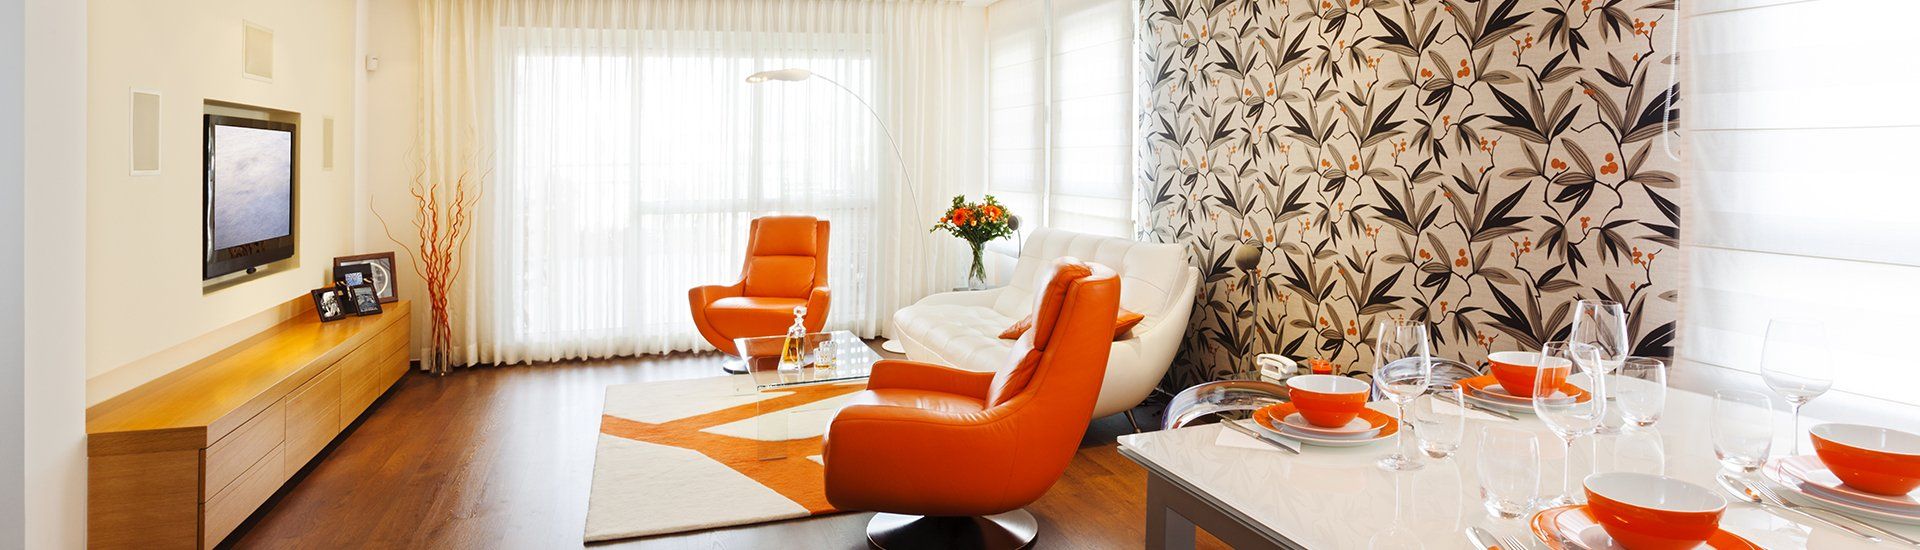 orange and white themed living room 